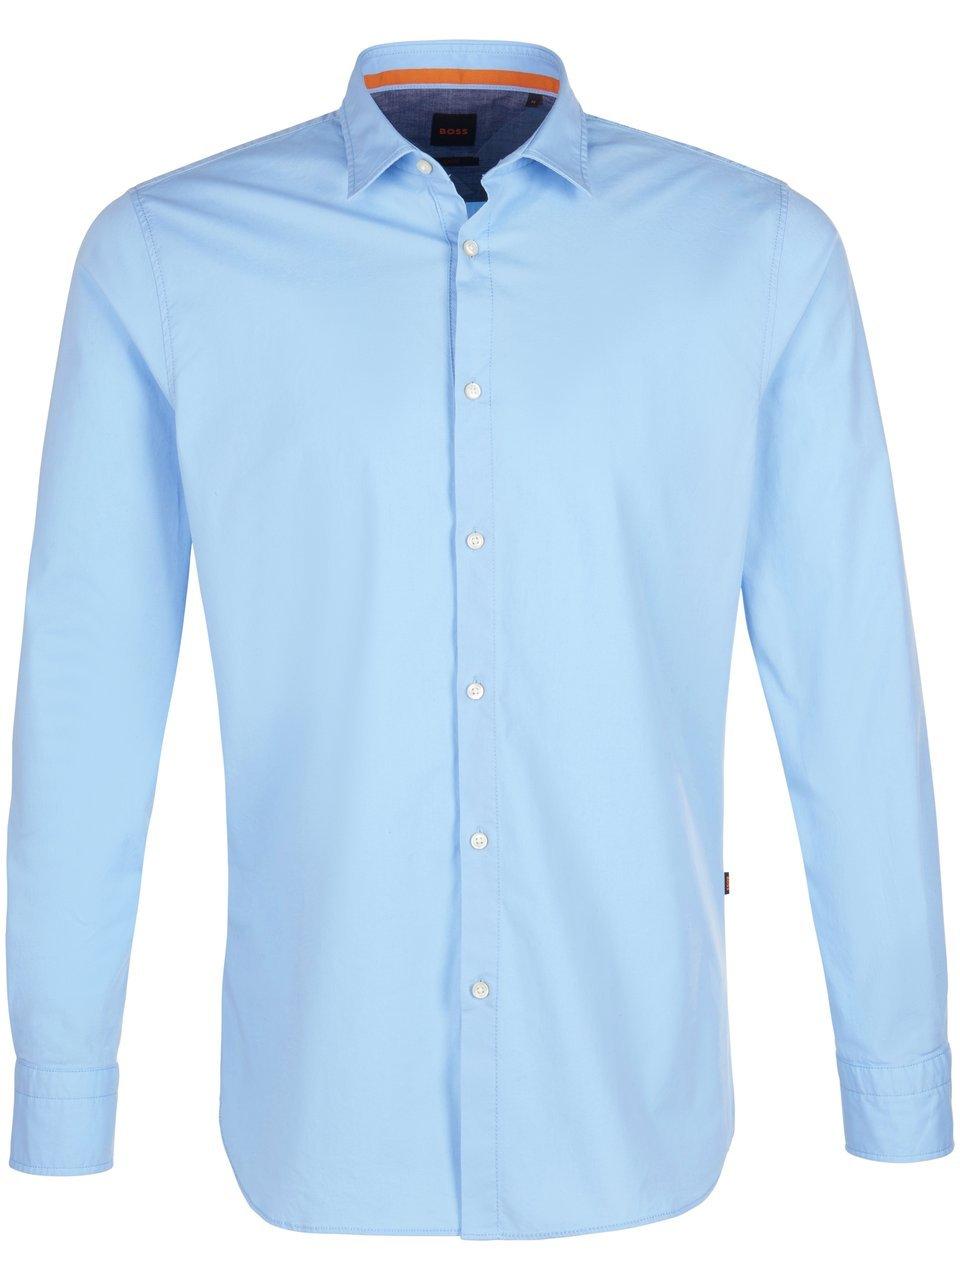 Hugo Boss - Overhemd Lichtblauw - Maat 3XL - Slim-fit